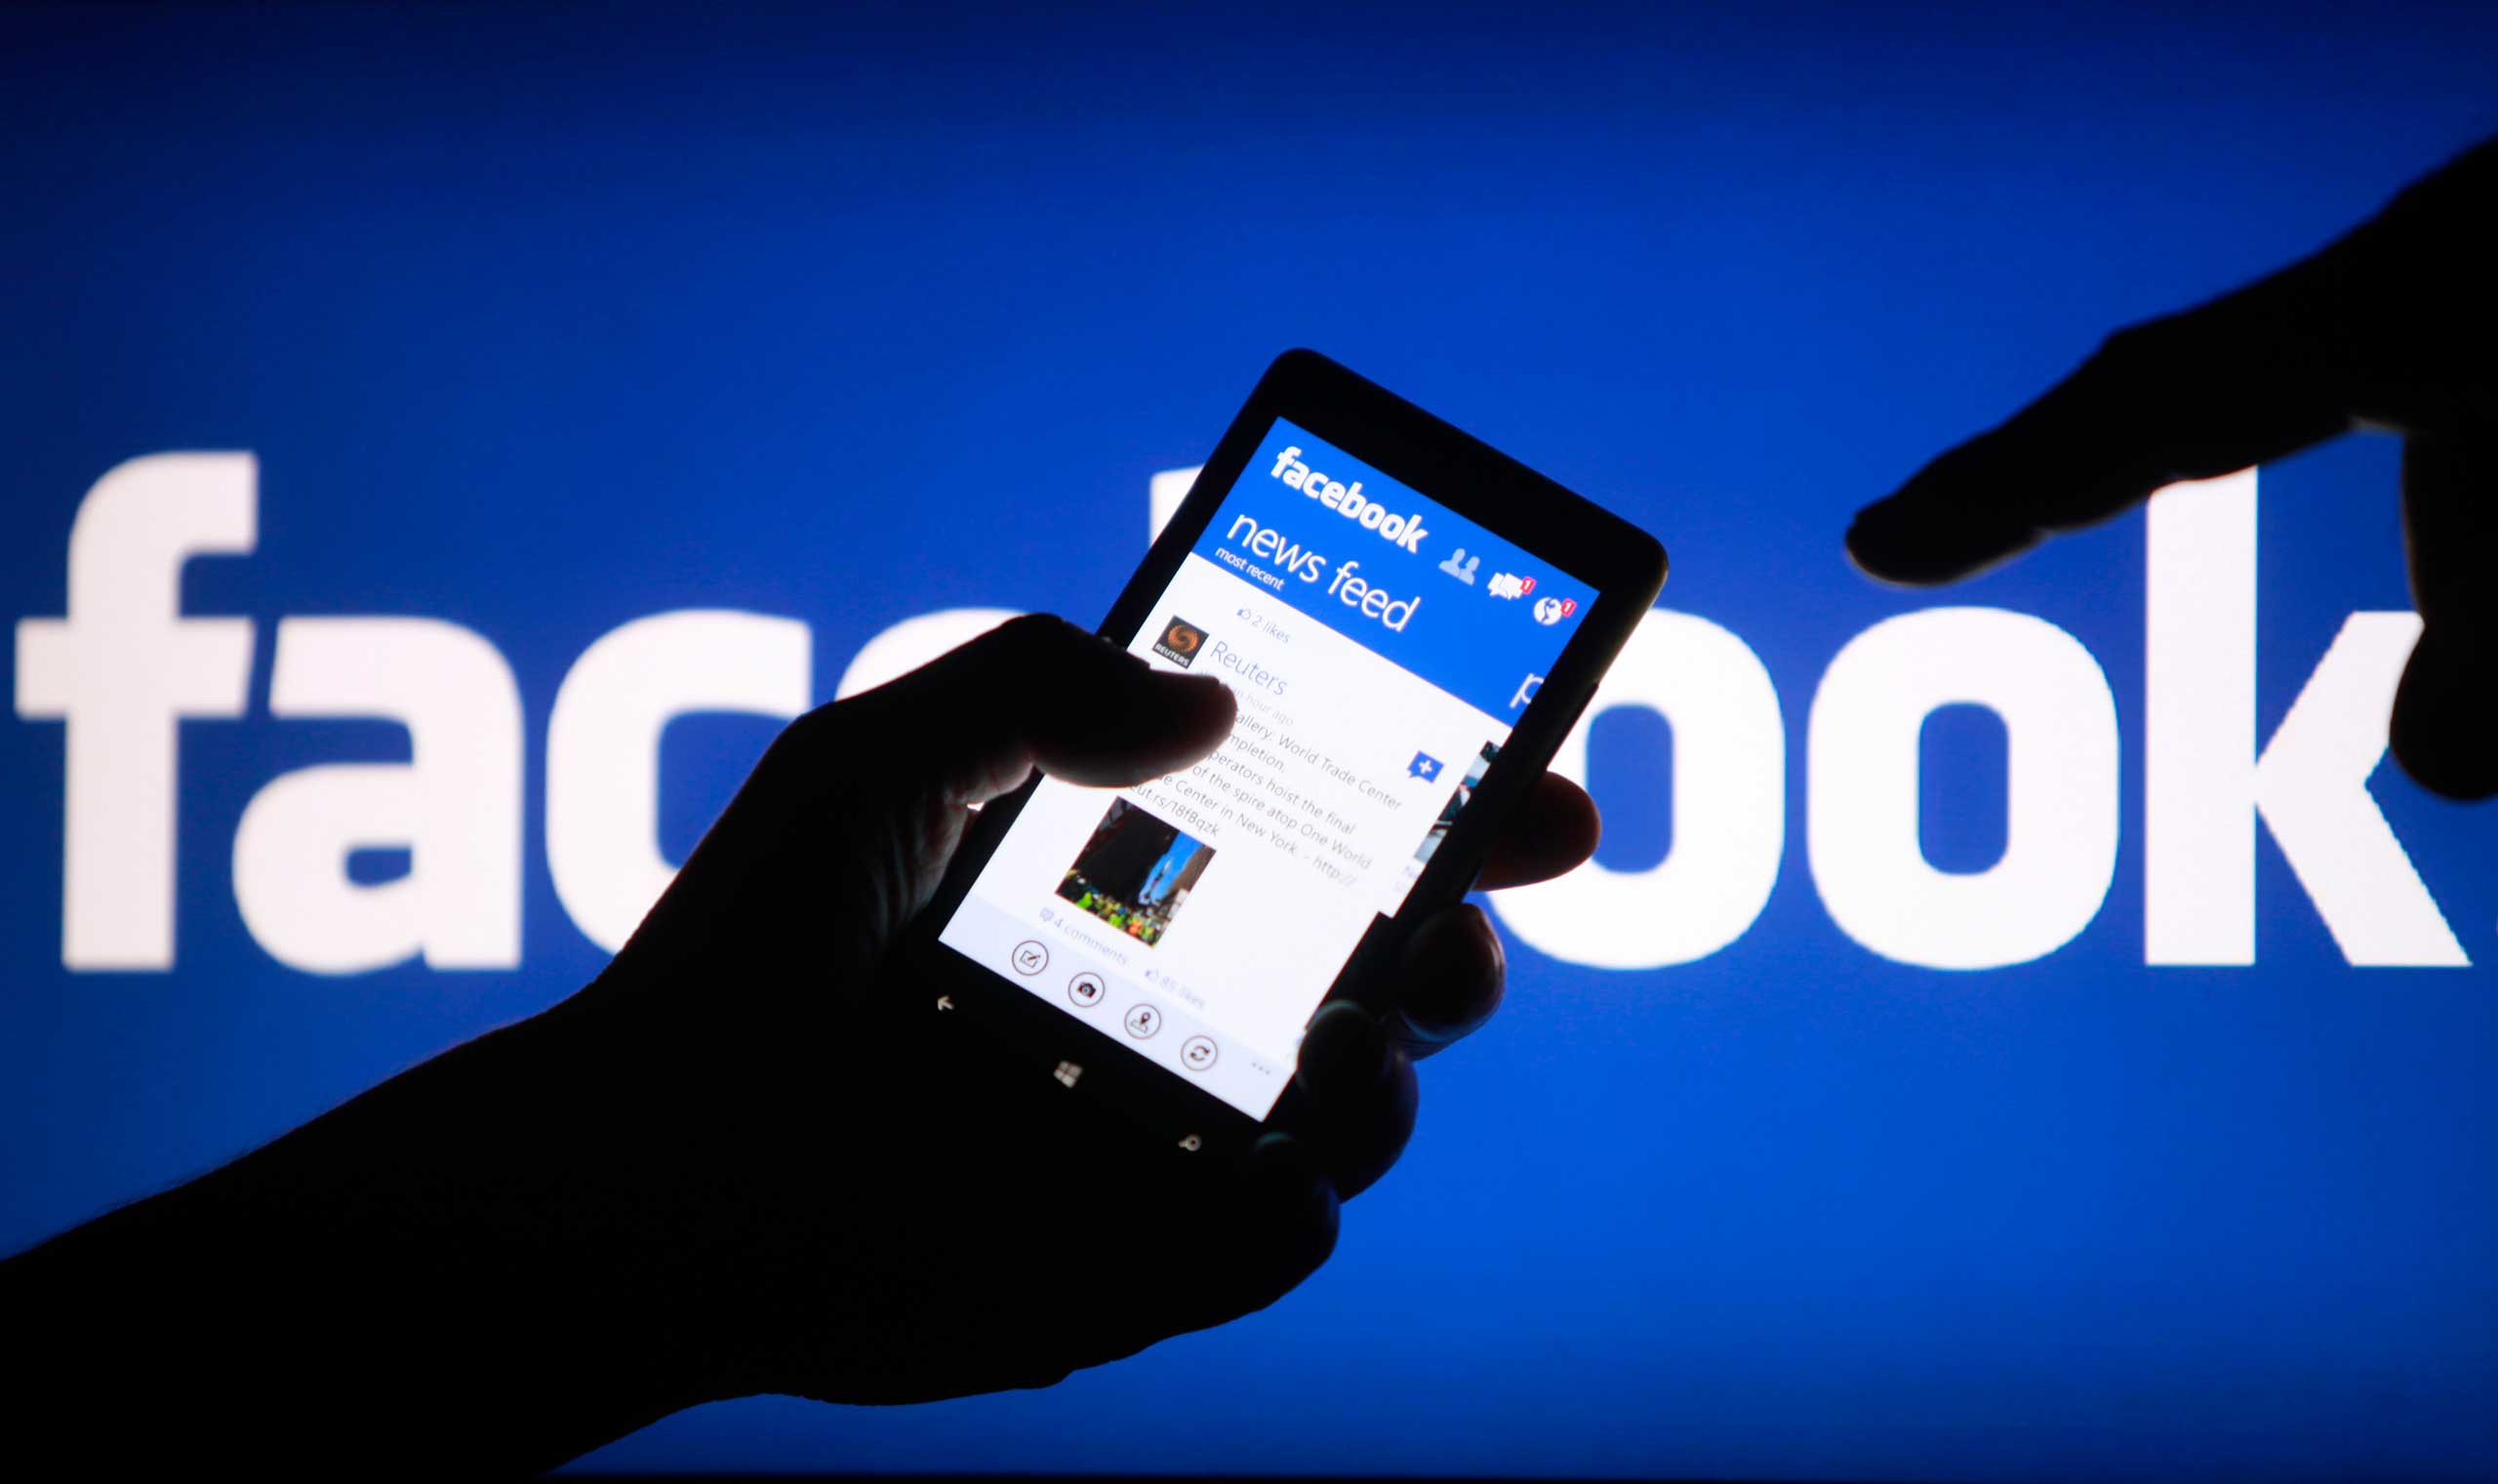 Facebook remains king of social media in Africa